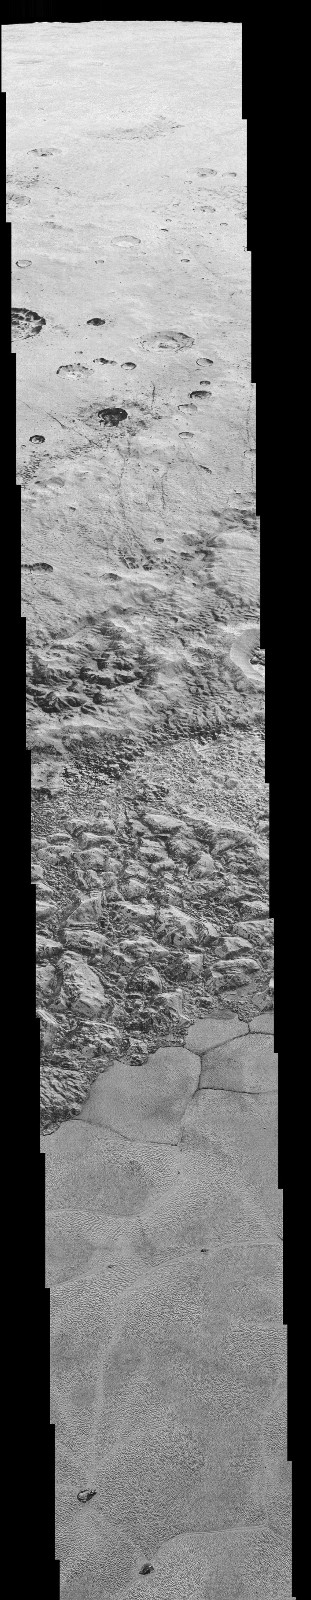 NASA公布冥王星地表高分辨率图片